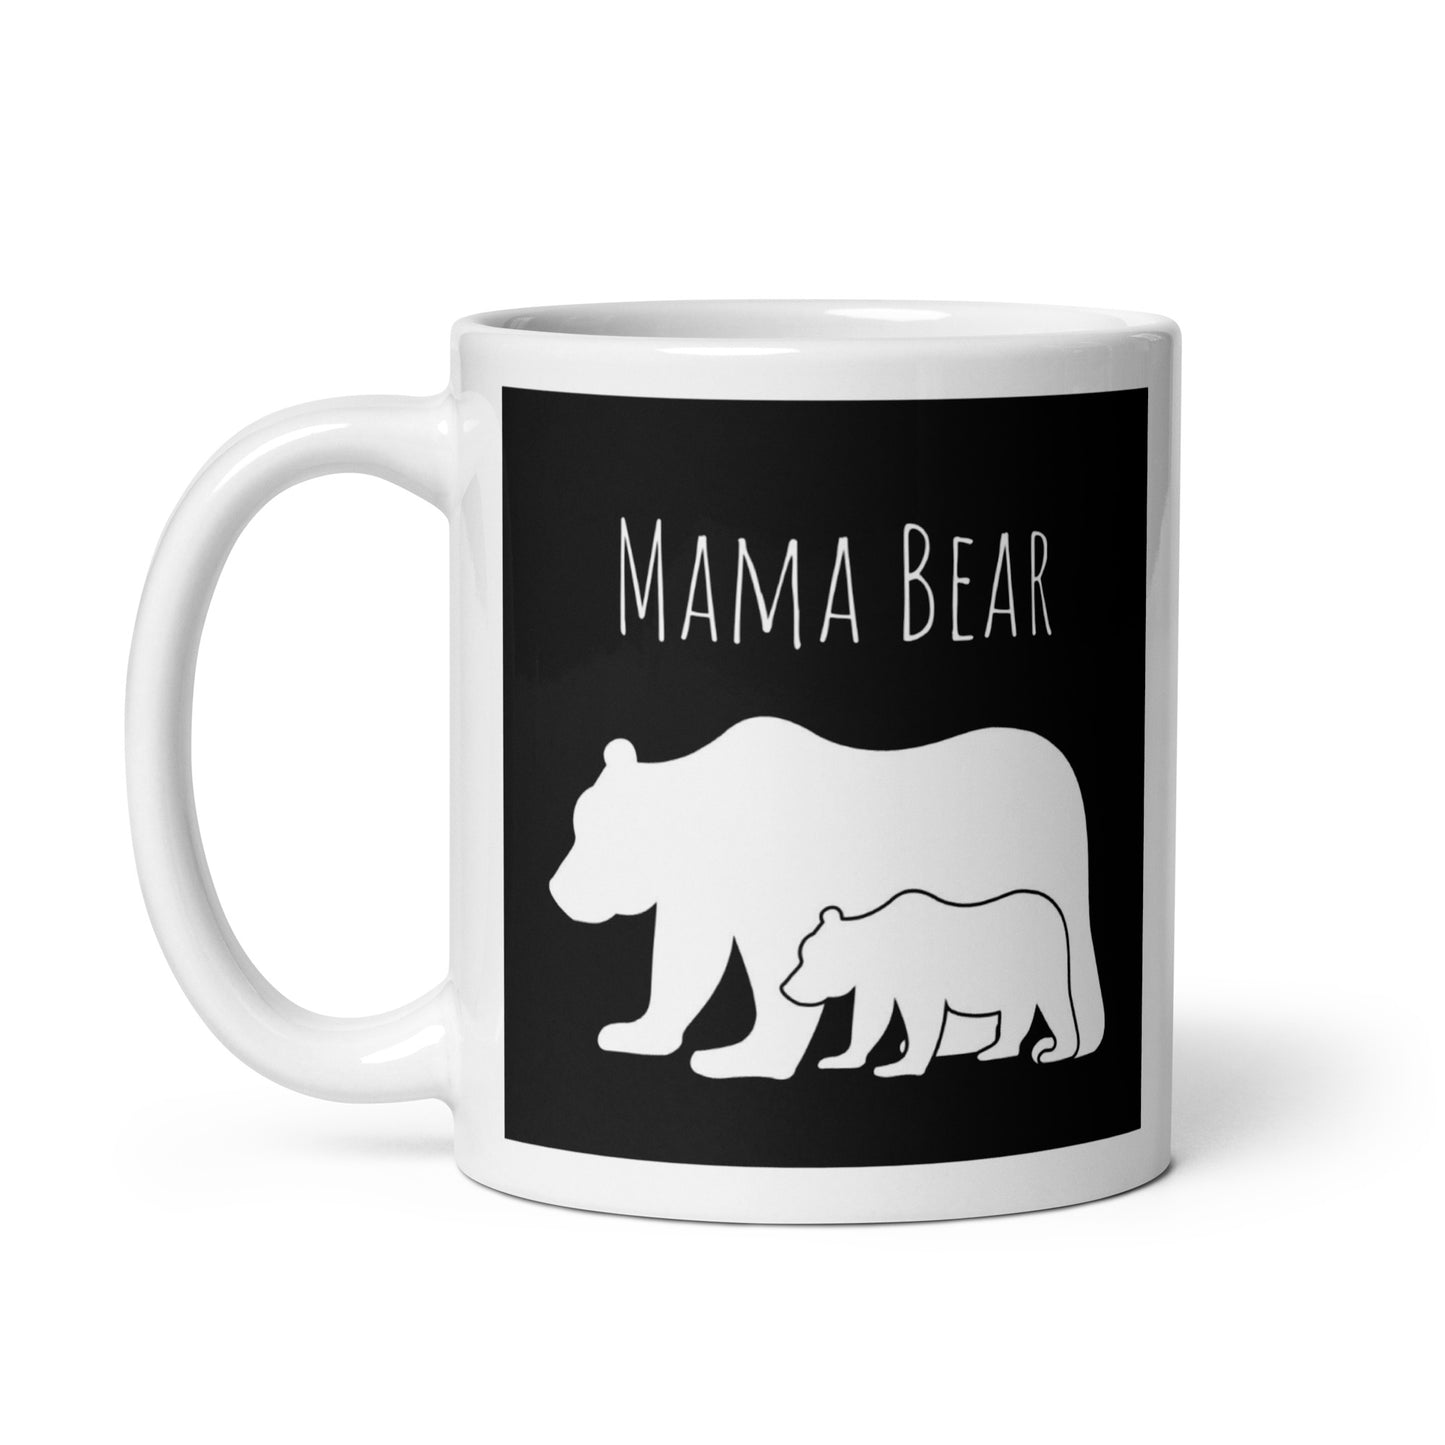 Mama Bear - White Glossy Mug - Gift - Mother's Day - Birthday